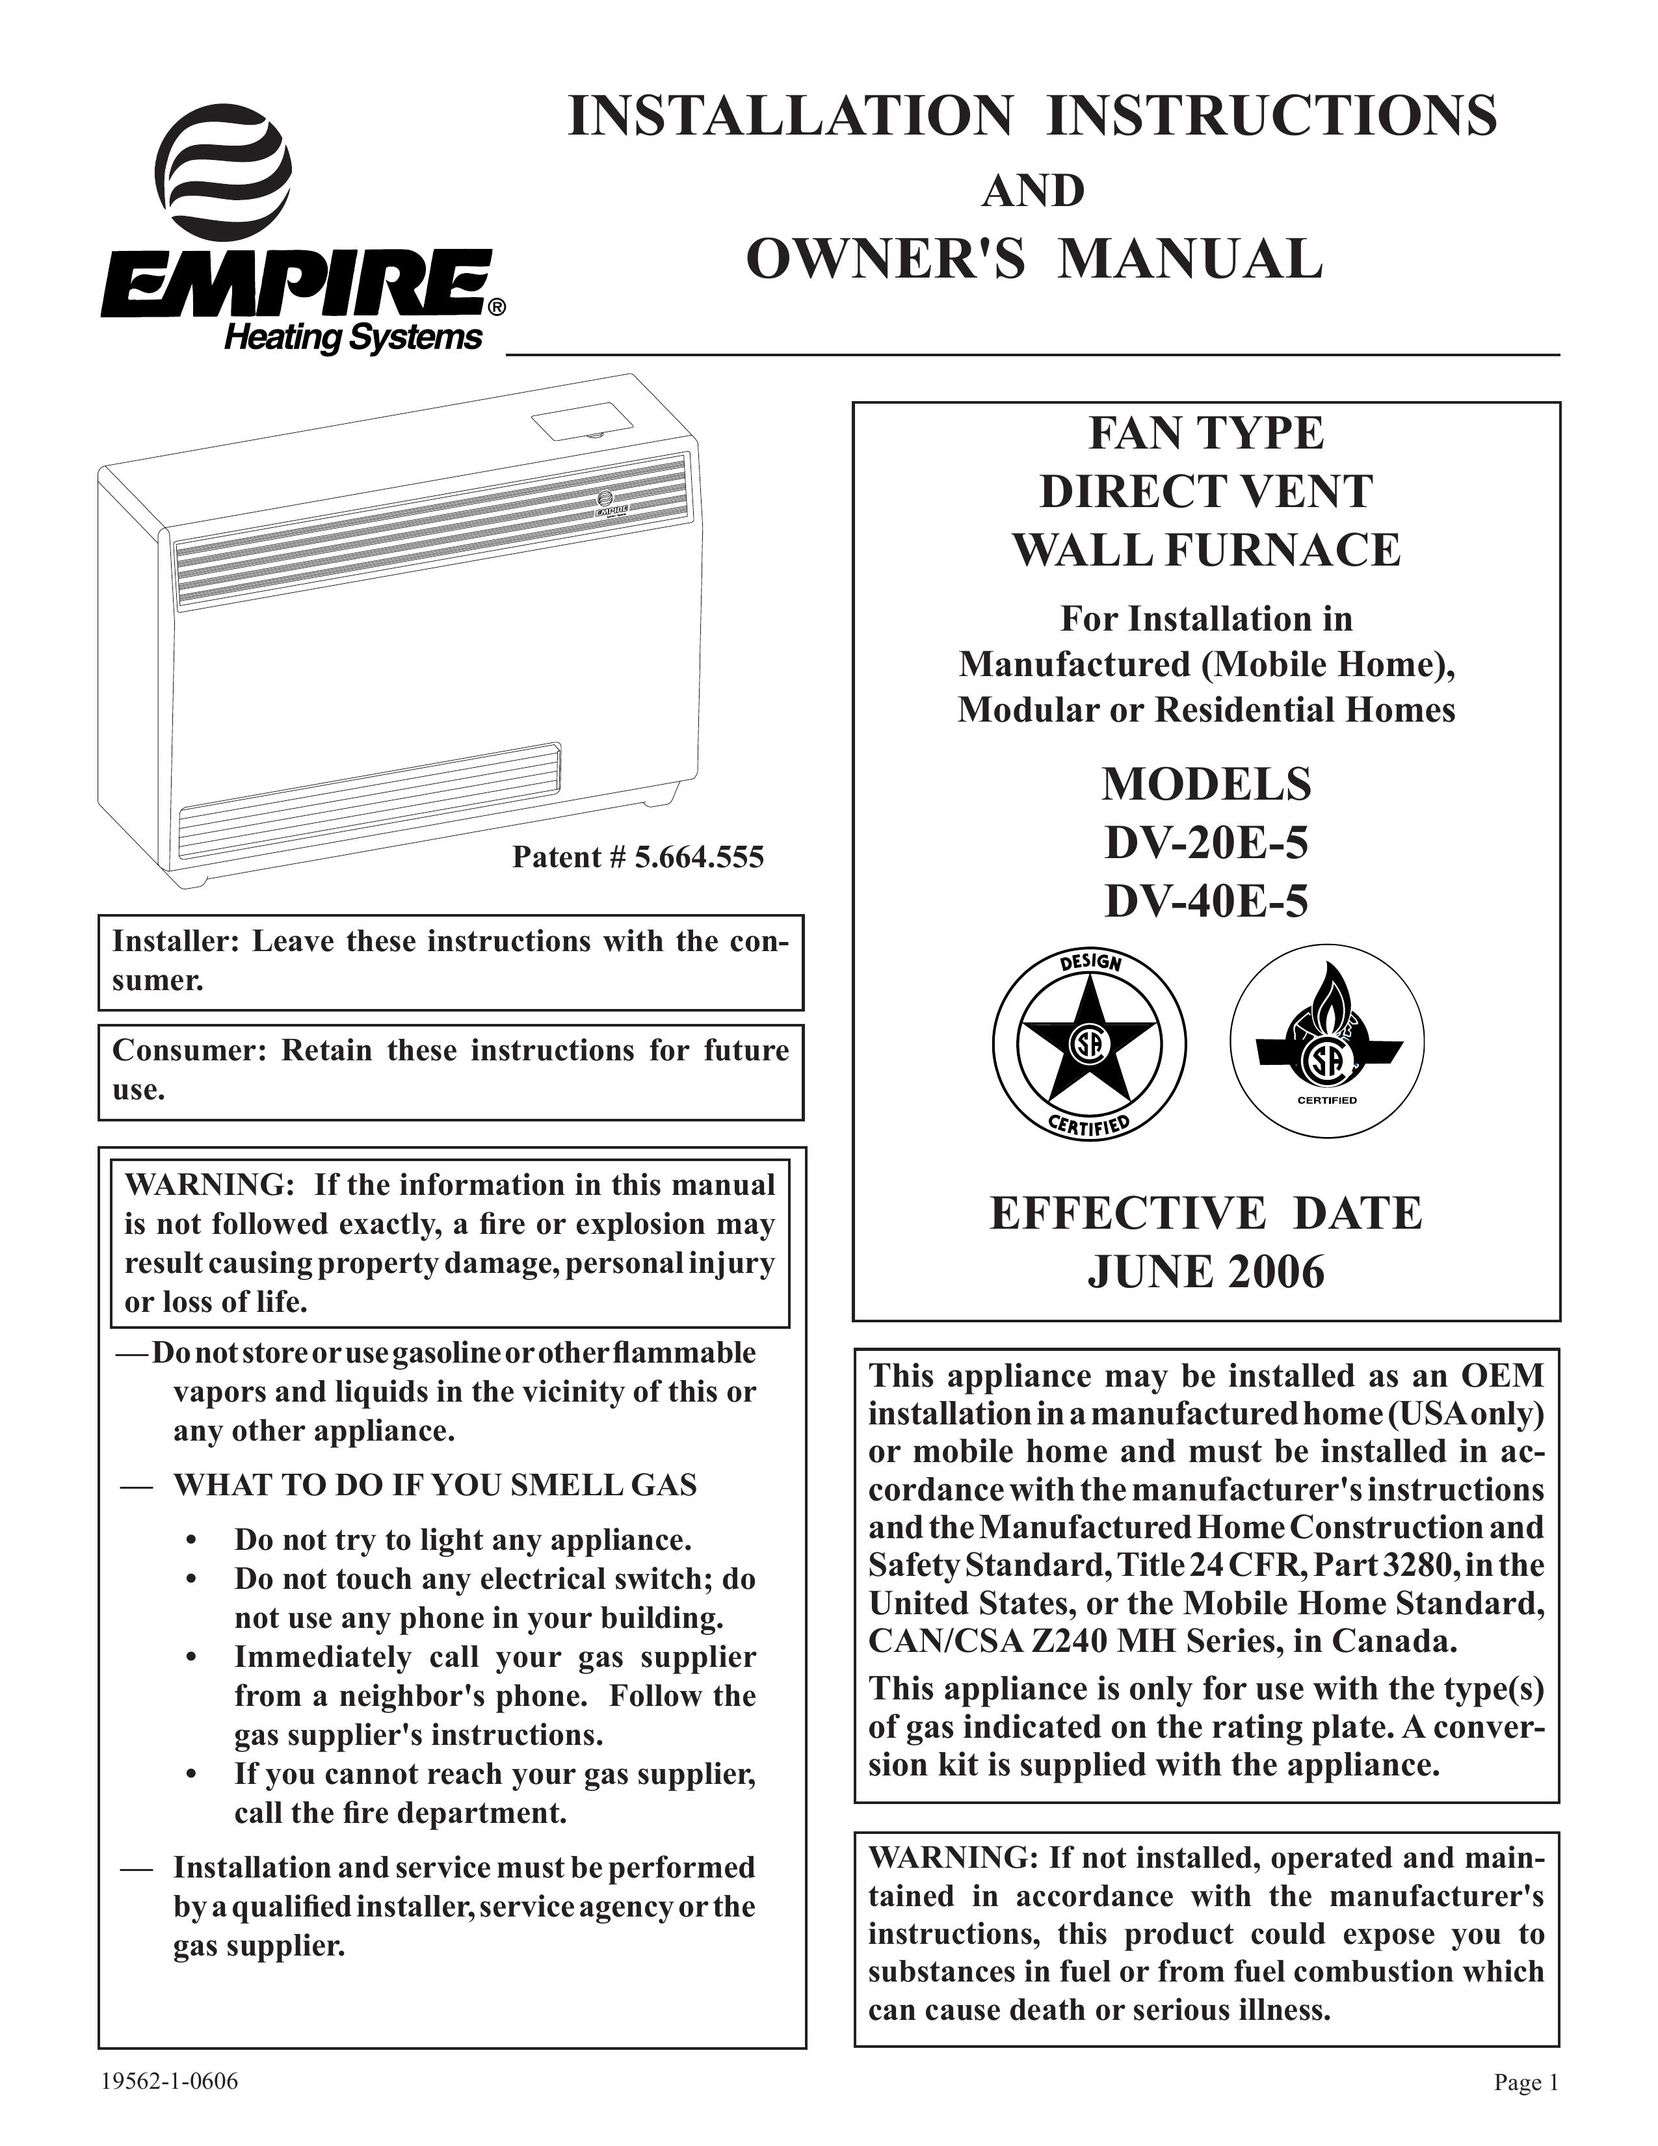 Langley/Empire DV-40E-5 Furnace User Manual